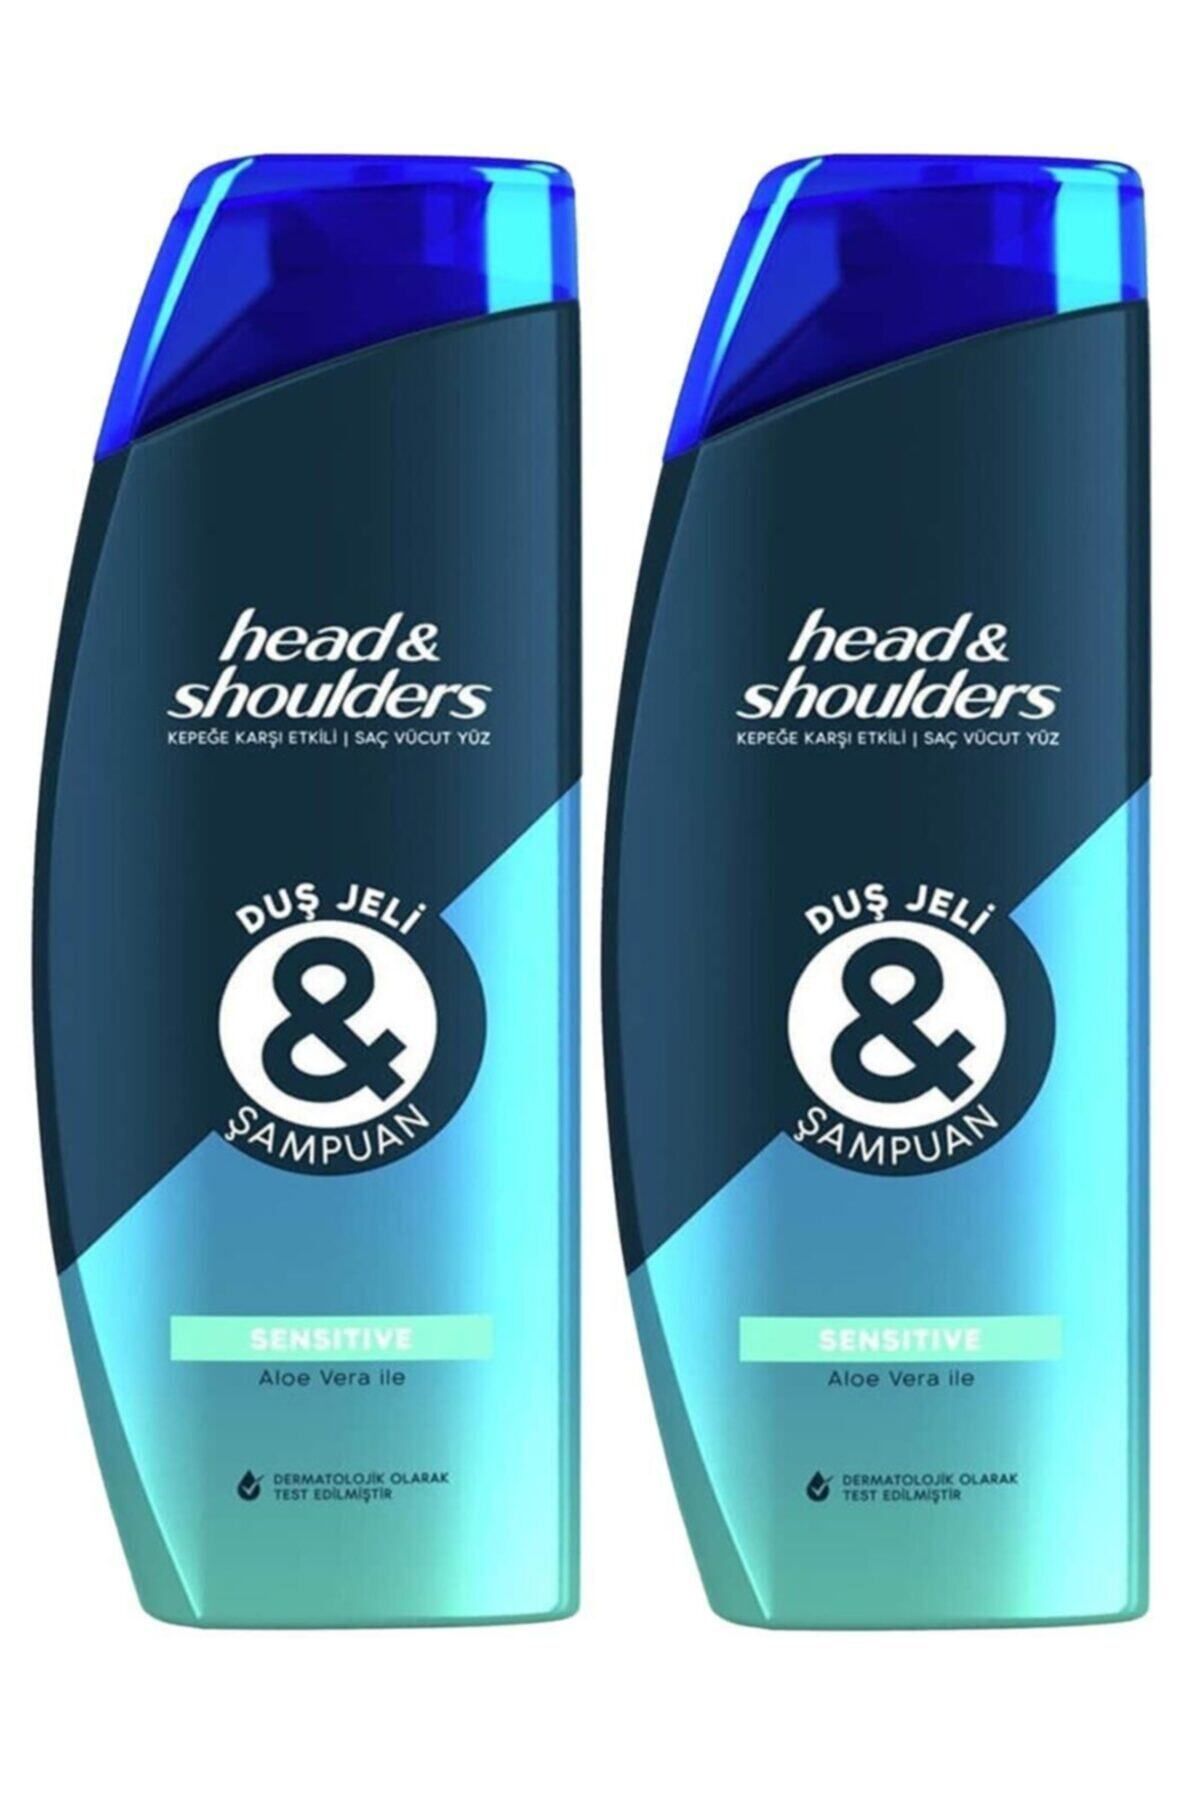 Head And Shoulders Head & Shoulders Duş Jeli Ve Şampuan Sensitive 360 Ml X 2 Adet